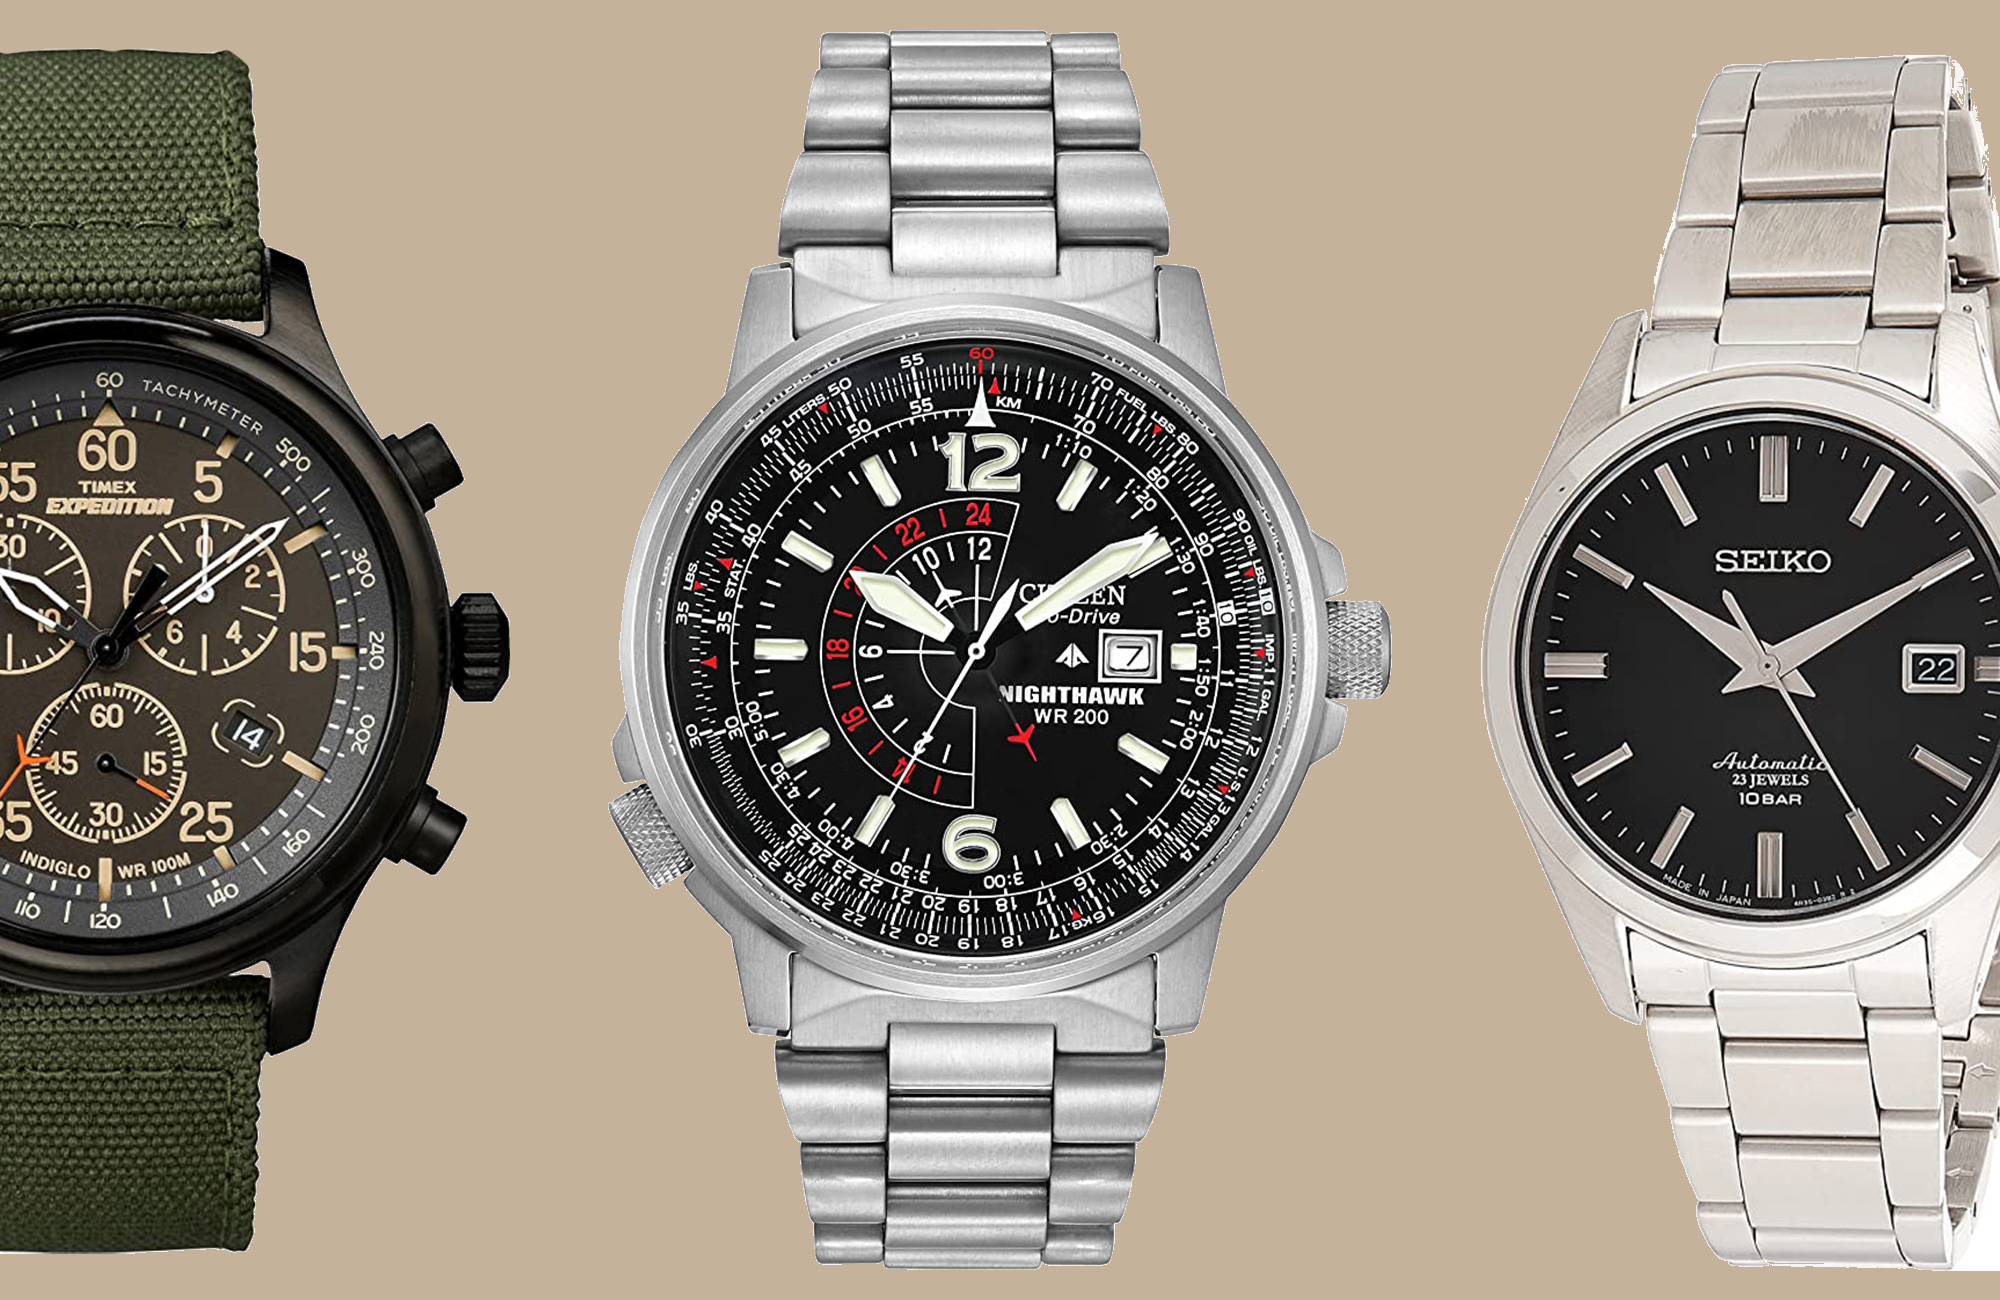 Timex watch deal Amazon